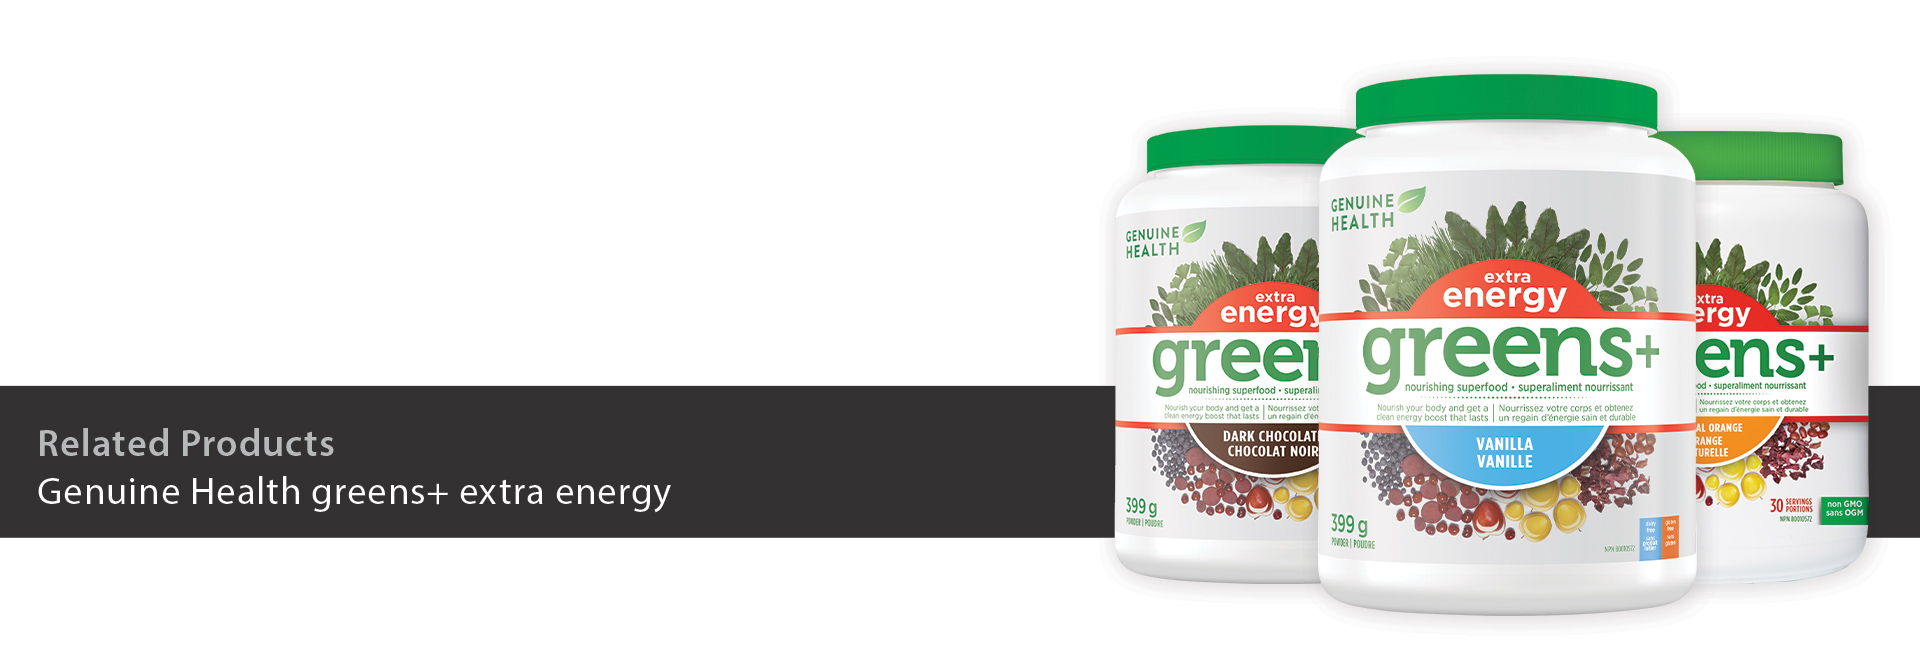 Genuine Health greens+ extra energy